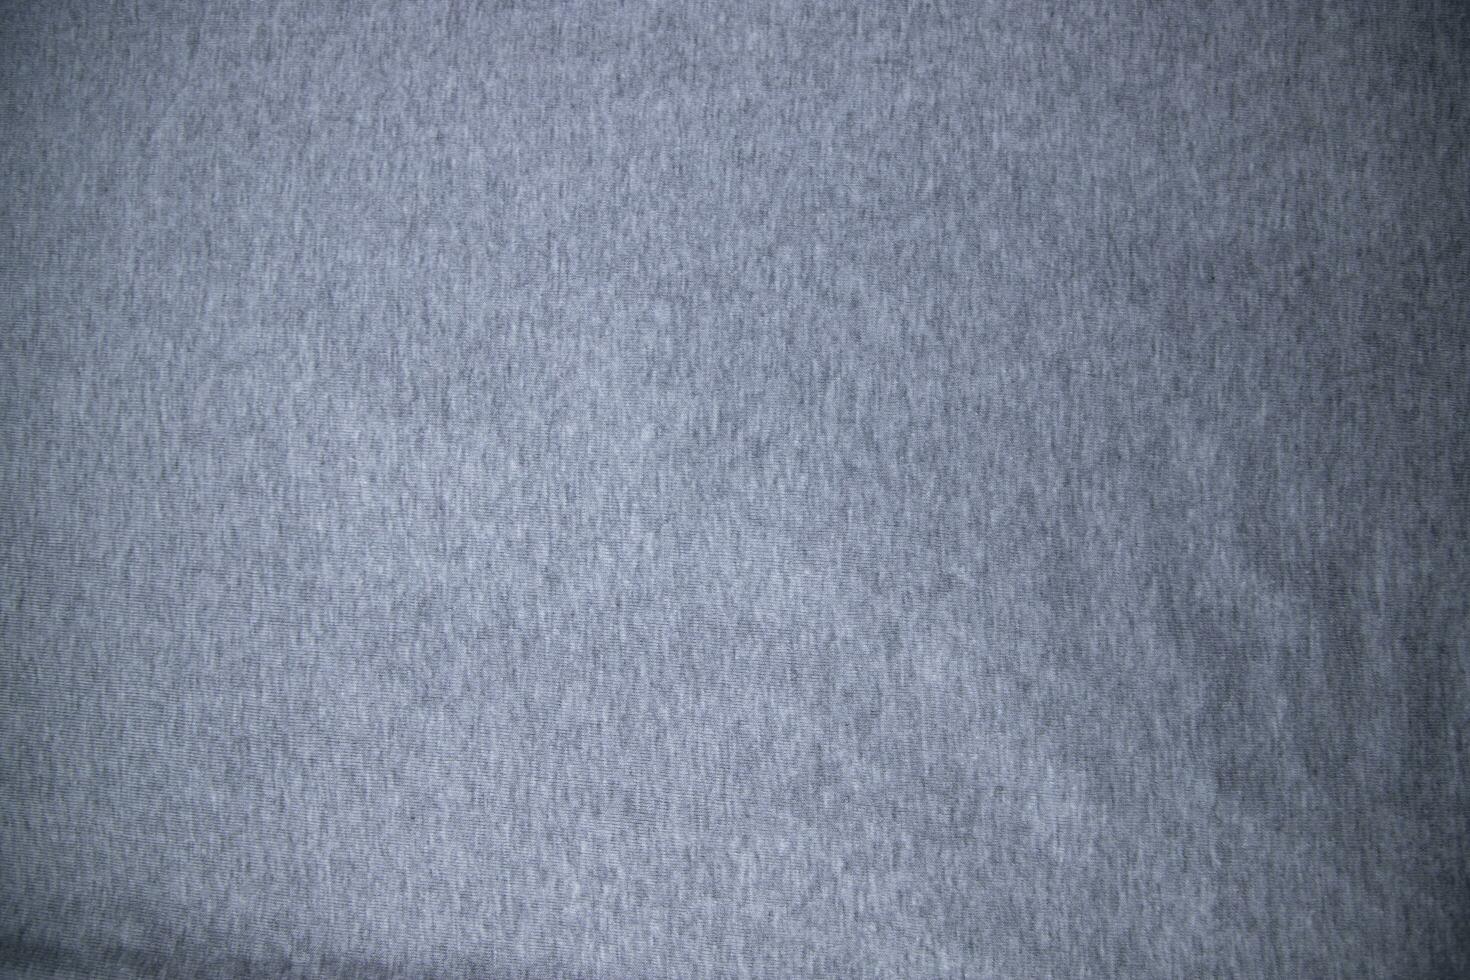 grigio melange tessuto superficie struttura sfondo sfondo foto